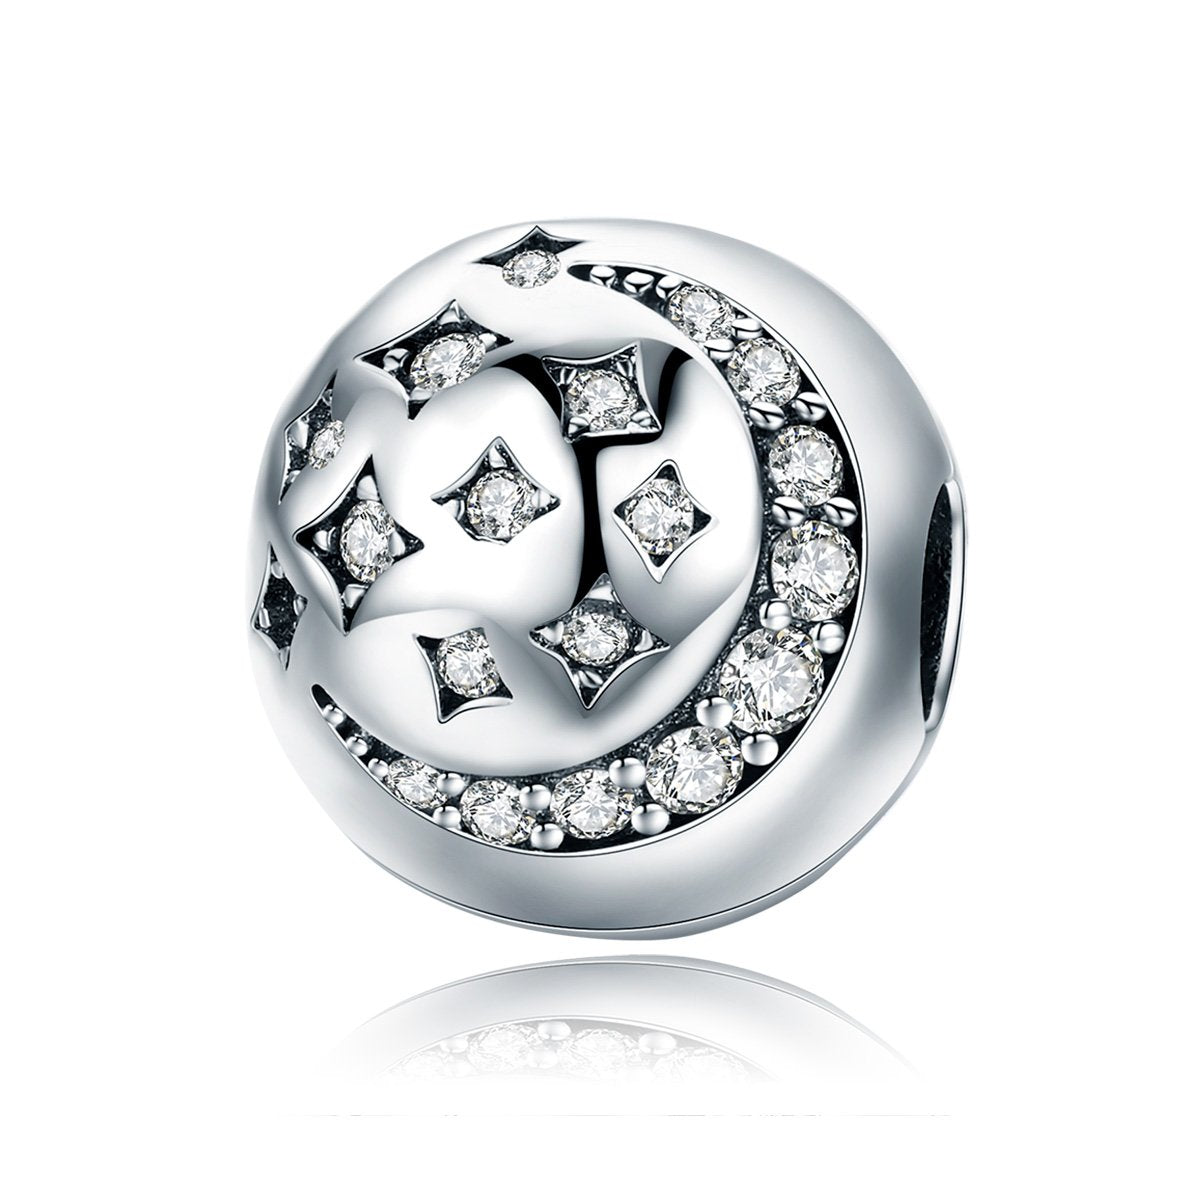 Sterling 925 silver charm the silver moon n stars pendant fits Pandora charm and European charm bracelet Xaxe.com